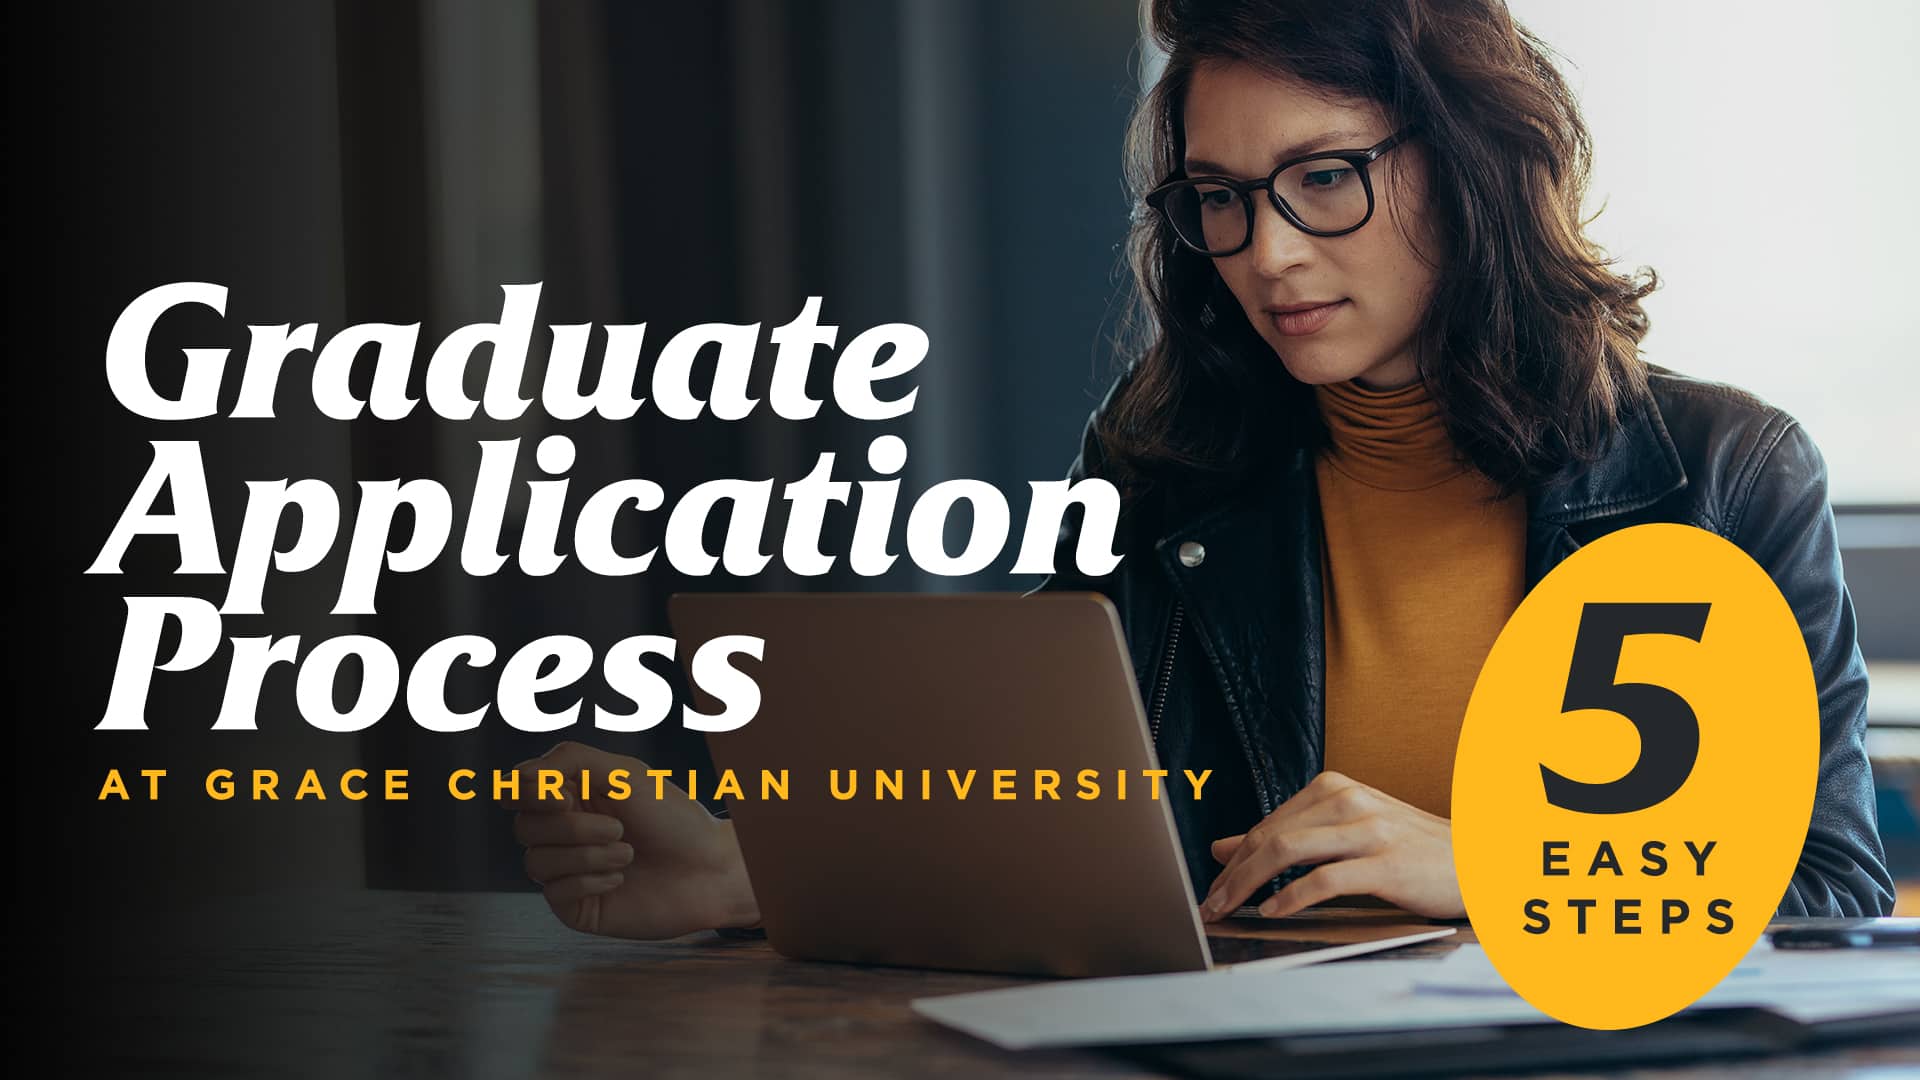 Graduate Application Process at Grace Christian University - 5 Easy Steps